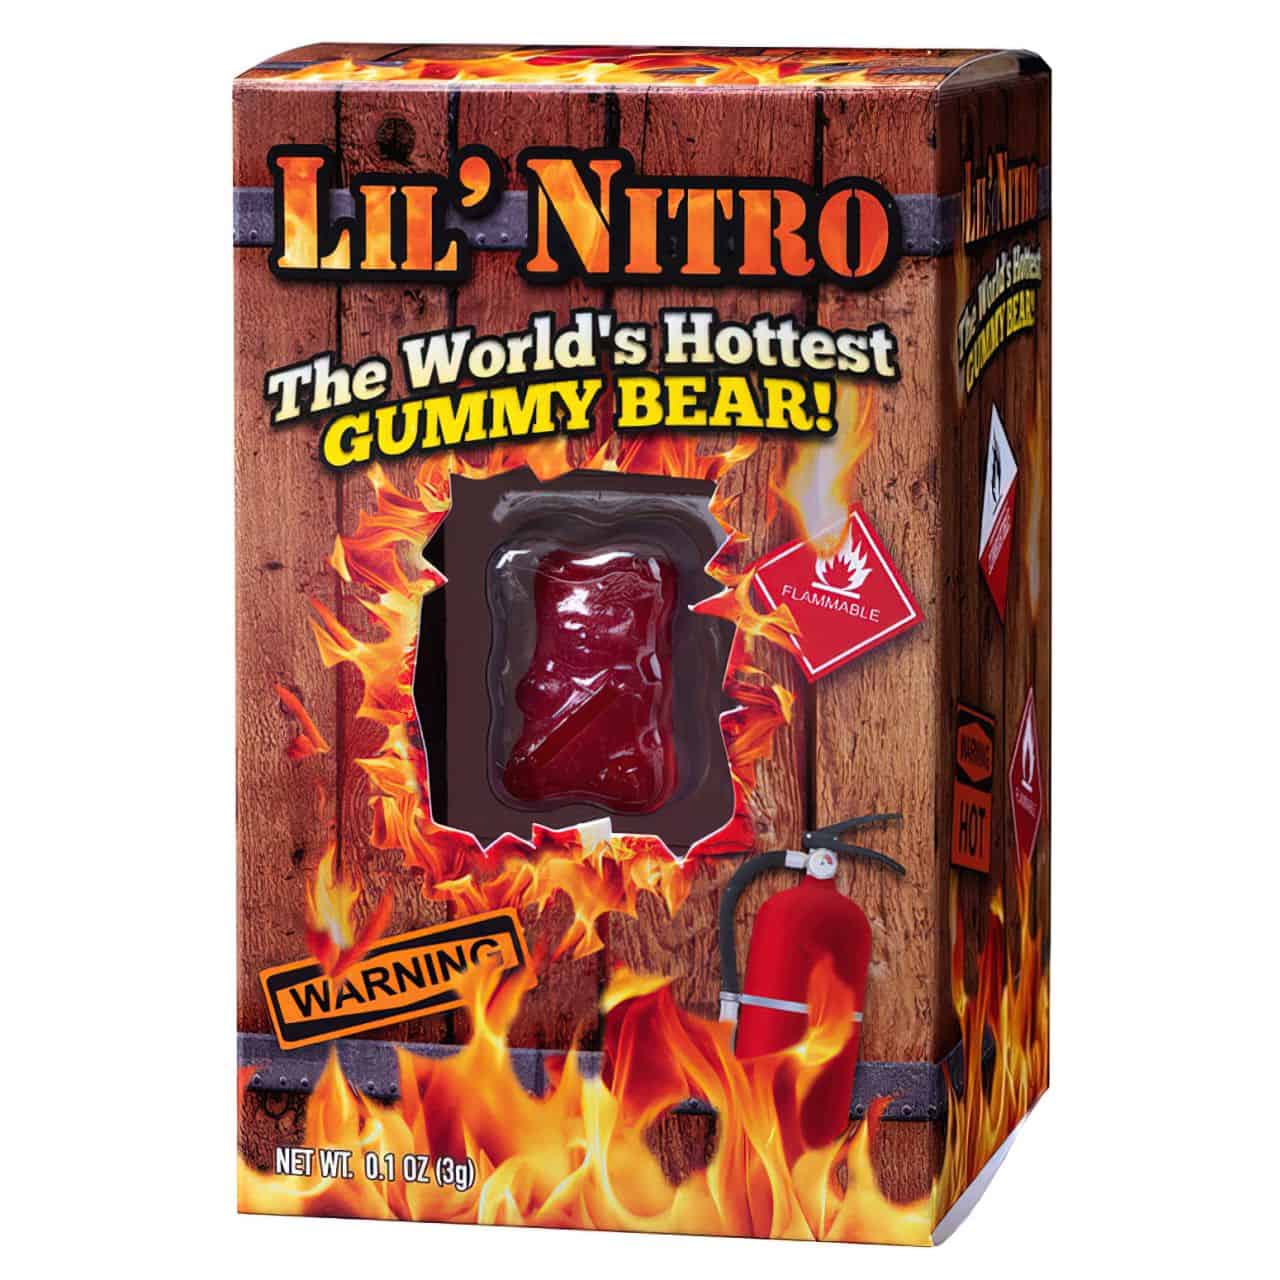 world's hottest gummy bear